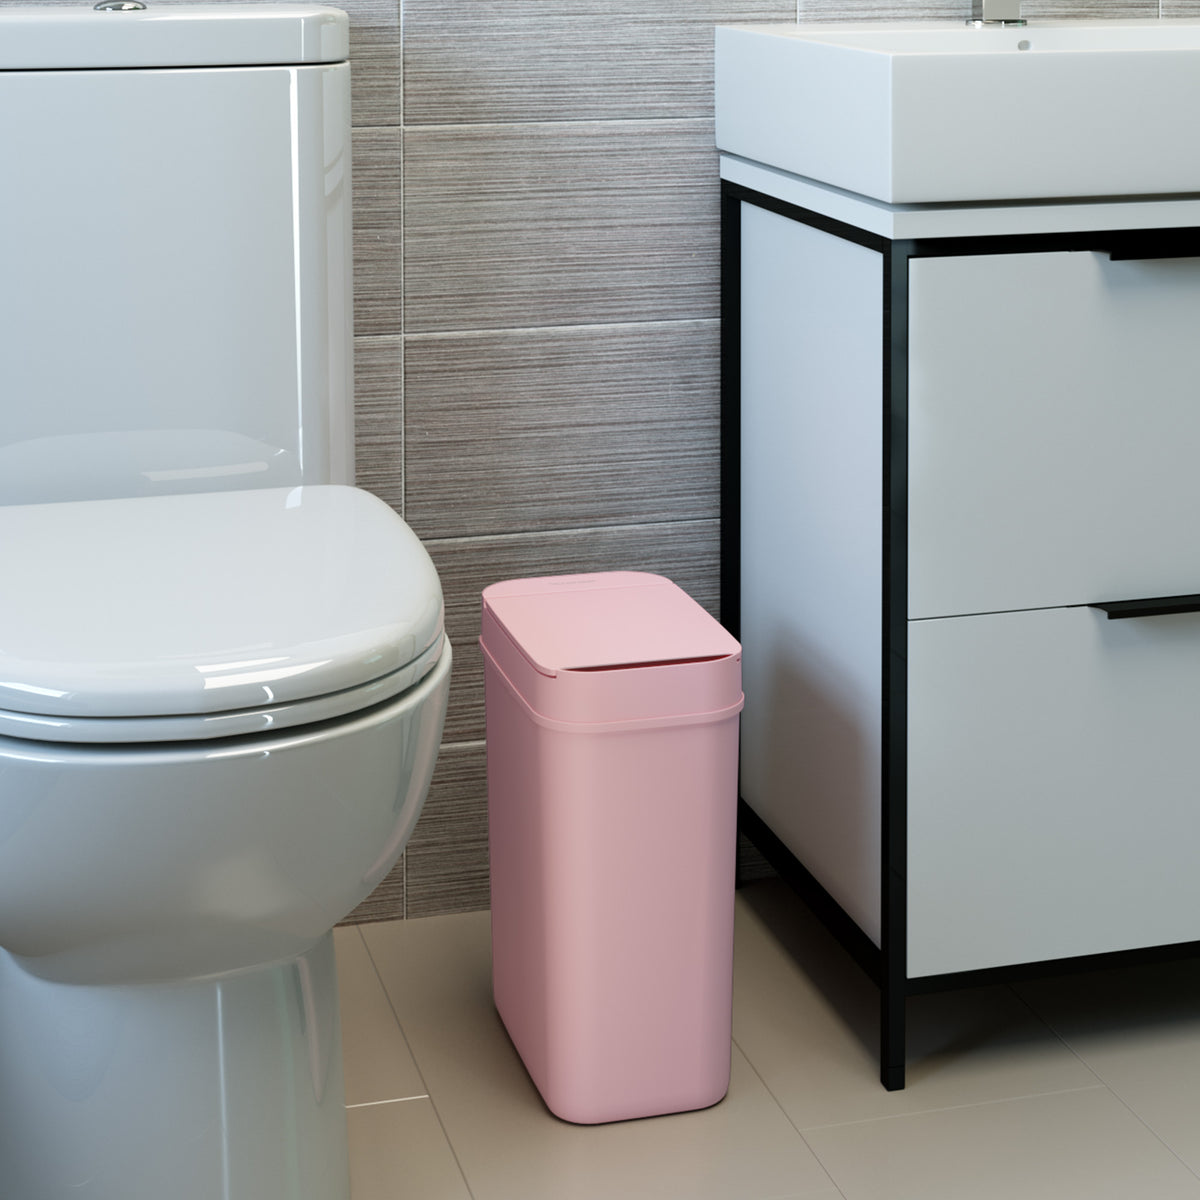 3 Gallon / 10 Liter Plastic Sensor Trash Can (Pink) in bathroom